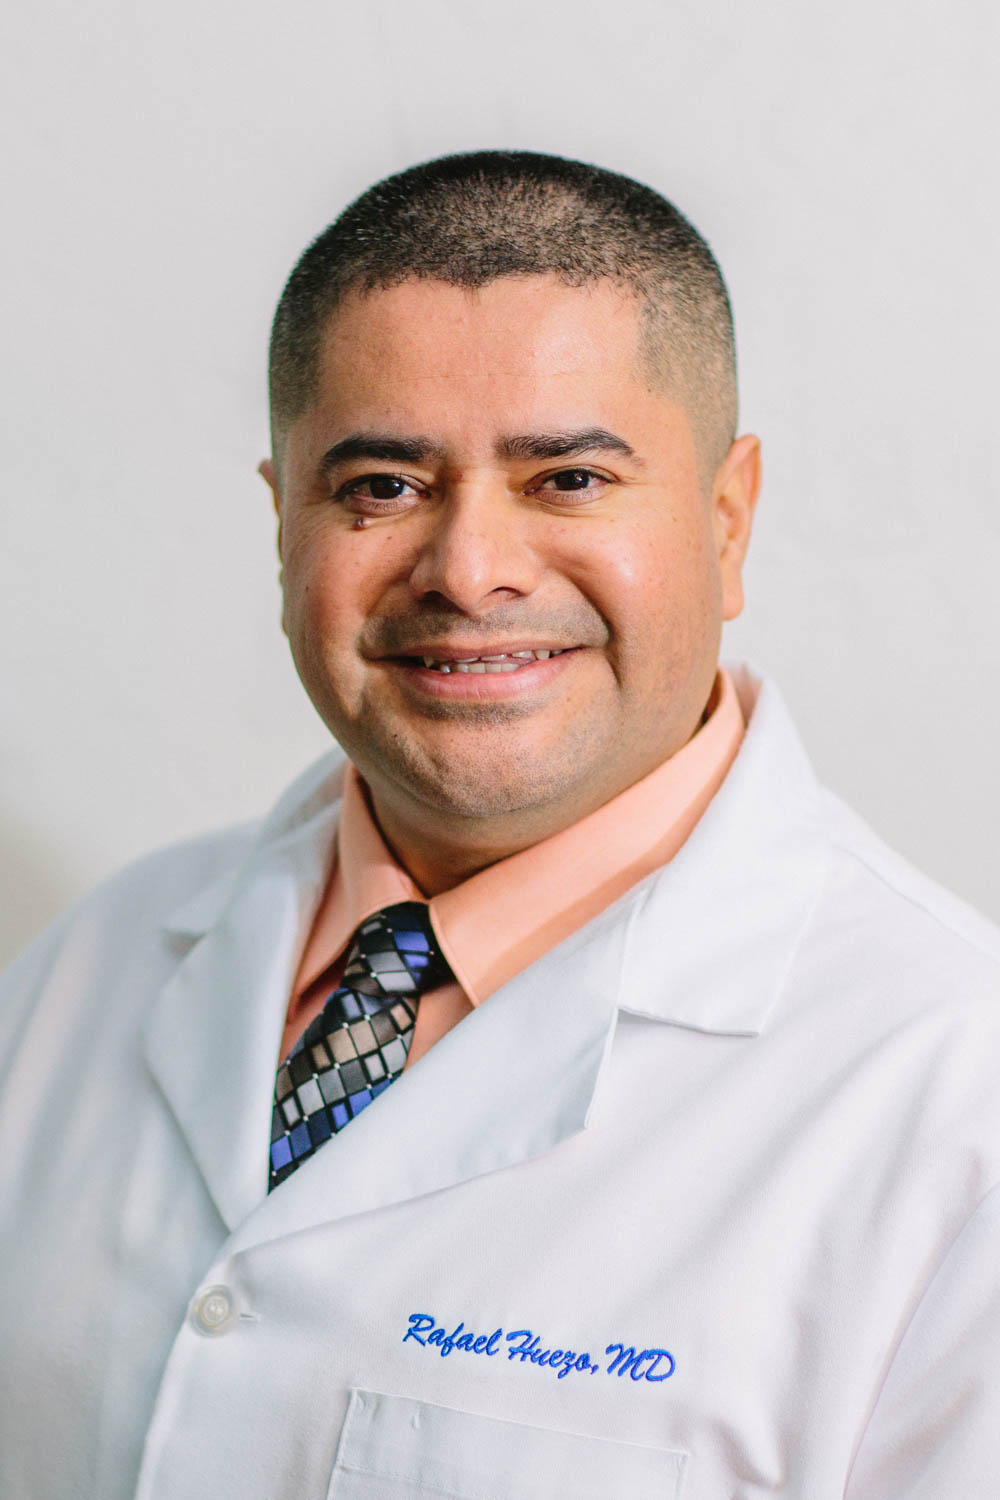 primary care physician, Rafael Huezo, MD